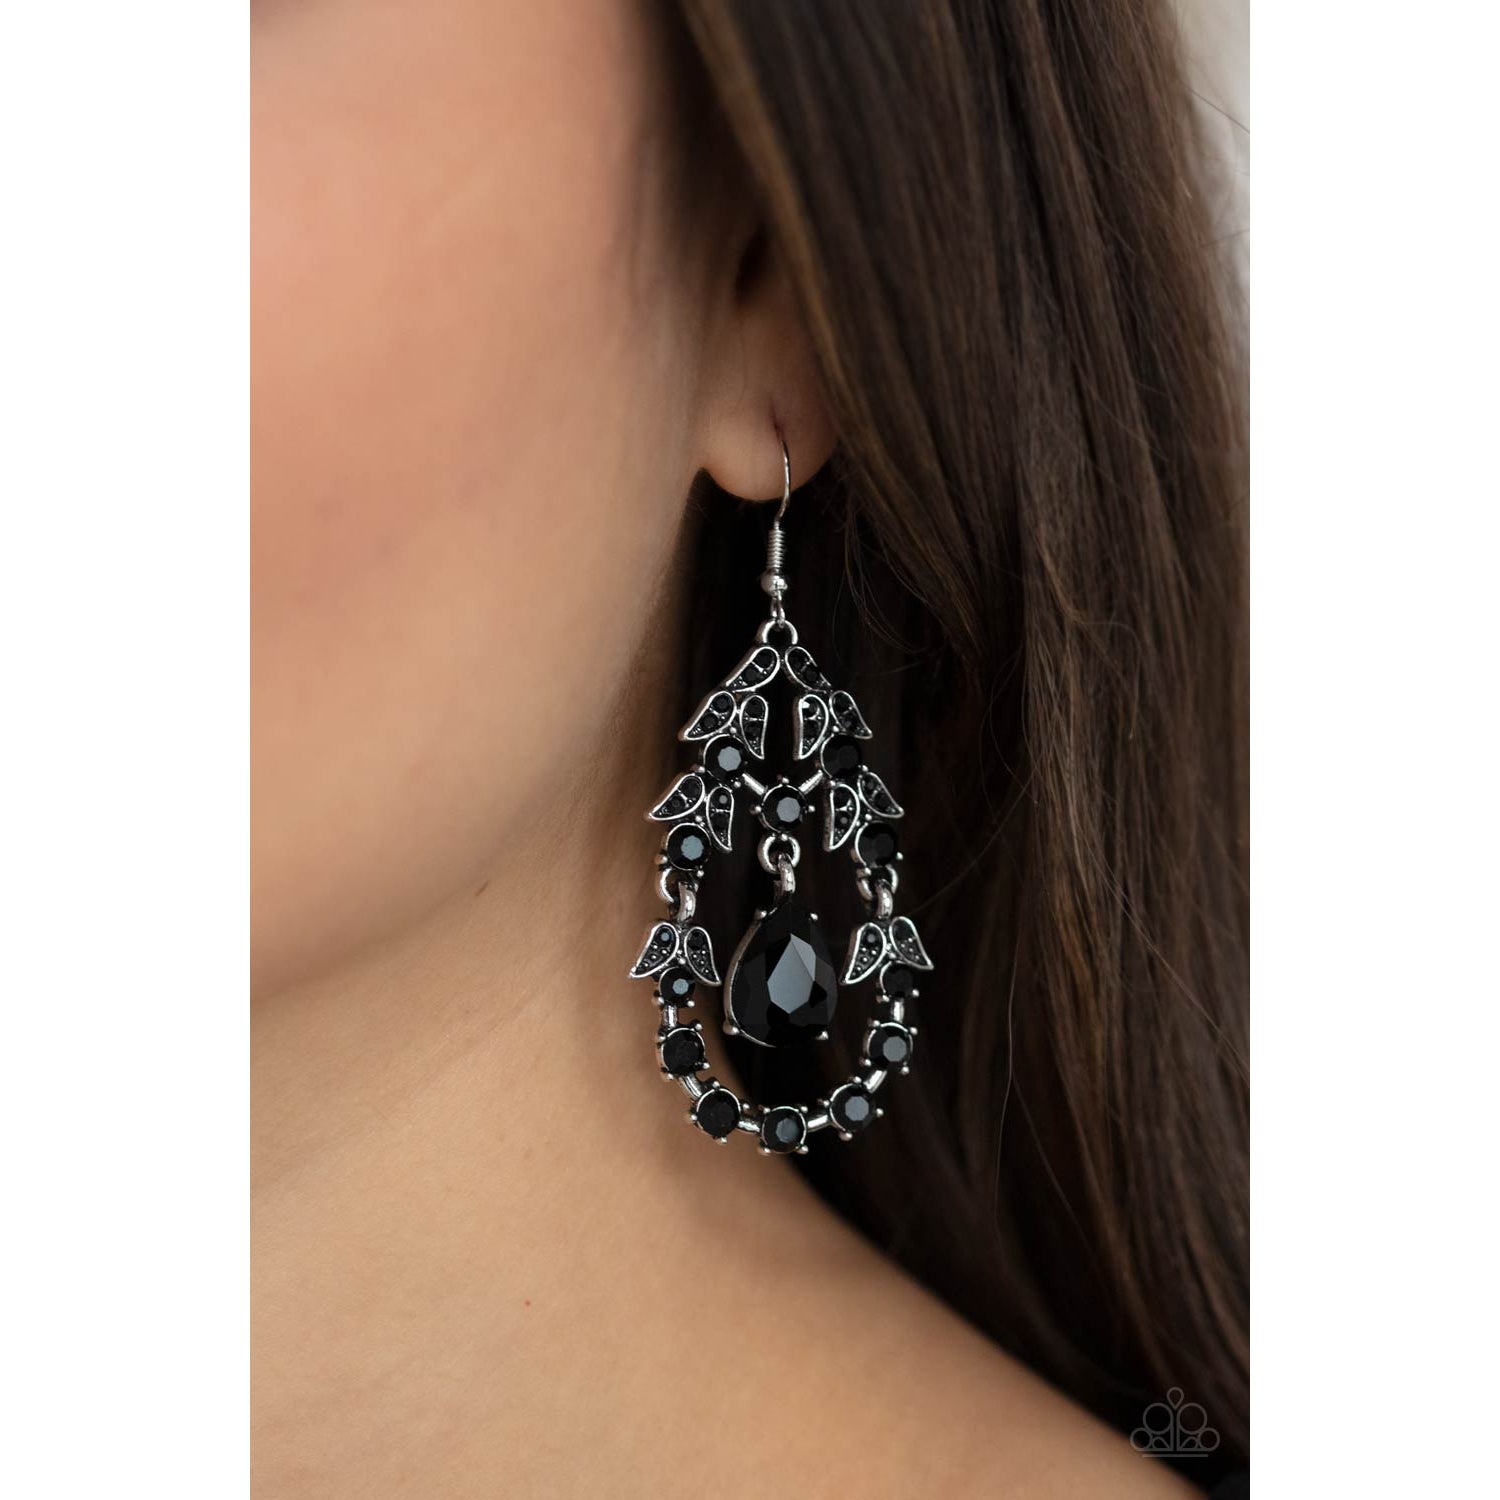 Garden Decorum - Black Teardrop Rhinestone Earrings - Paparazzi Accessories - GlaMarous Titi Jewels